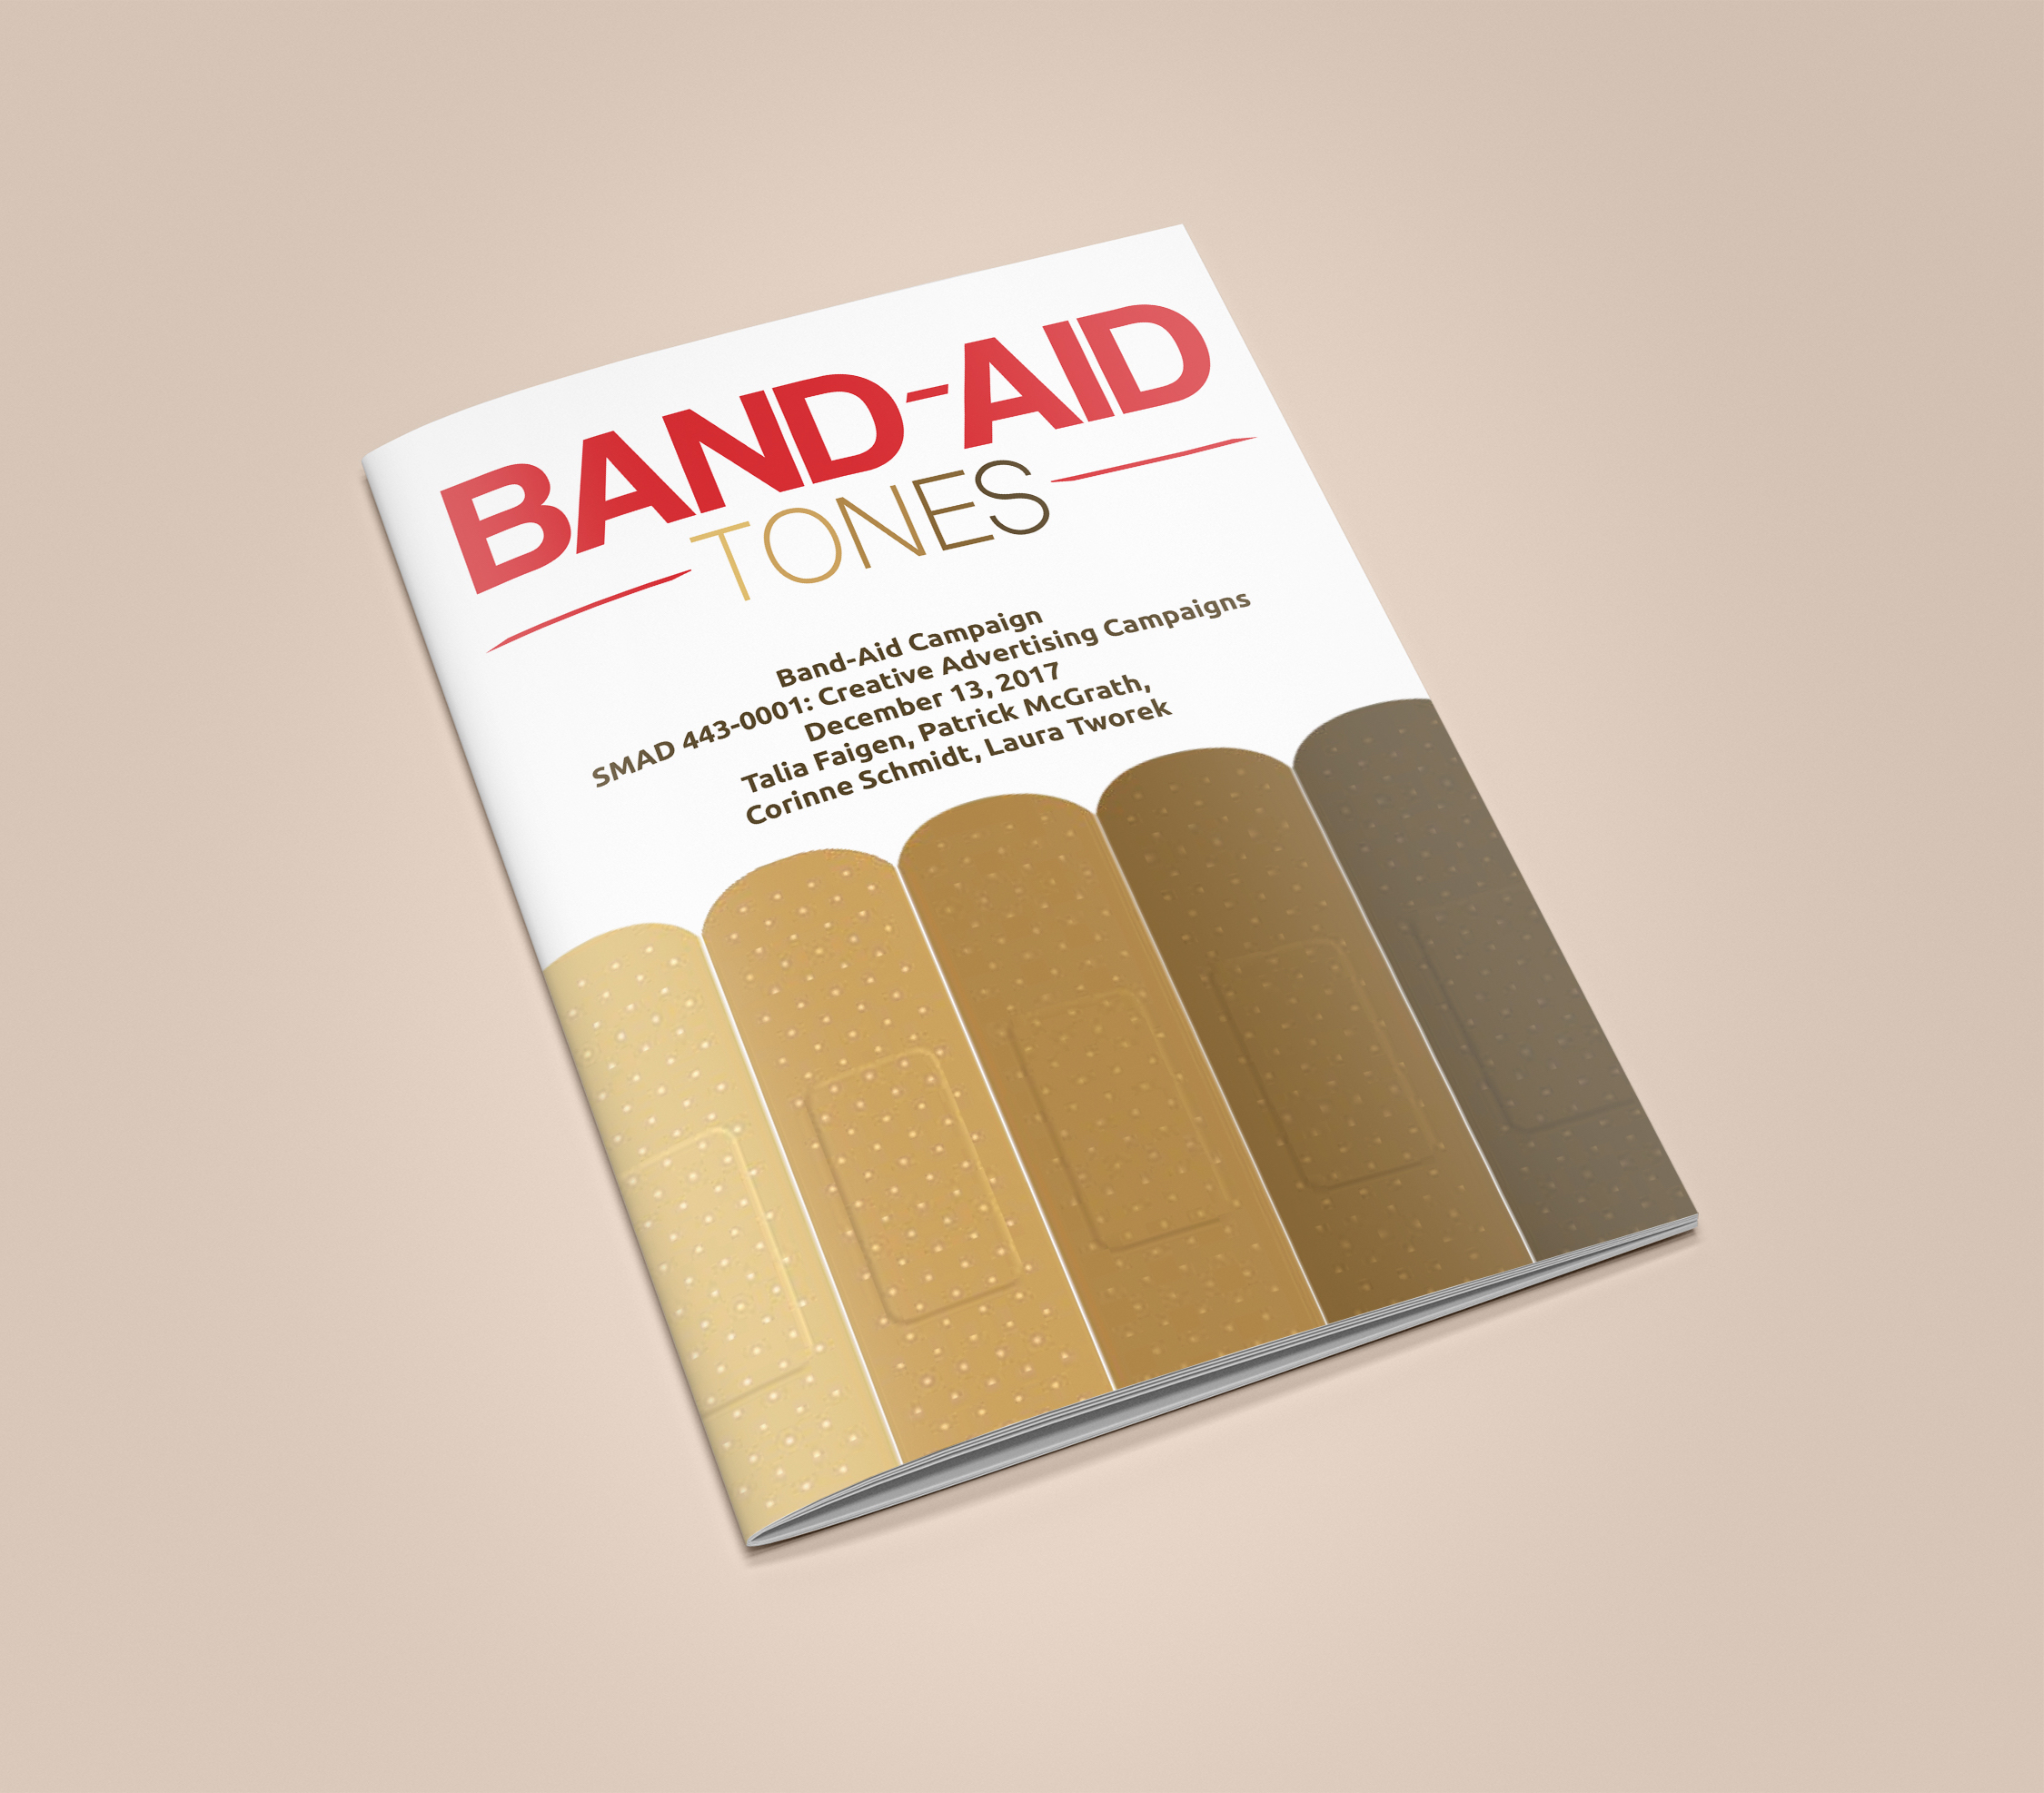 Band Aid Ads